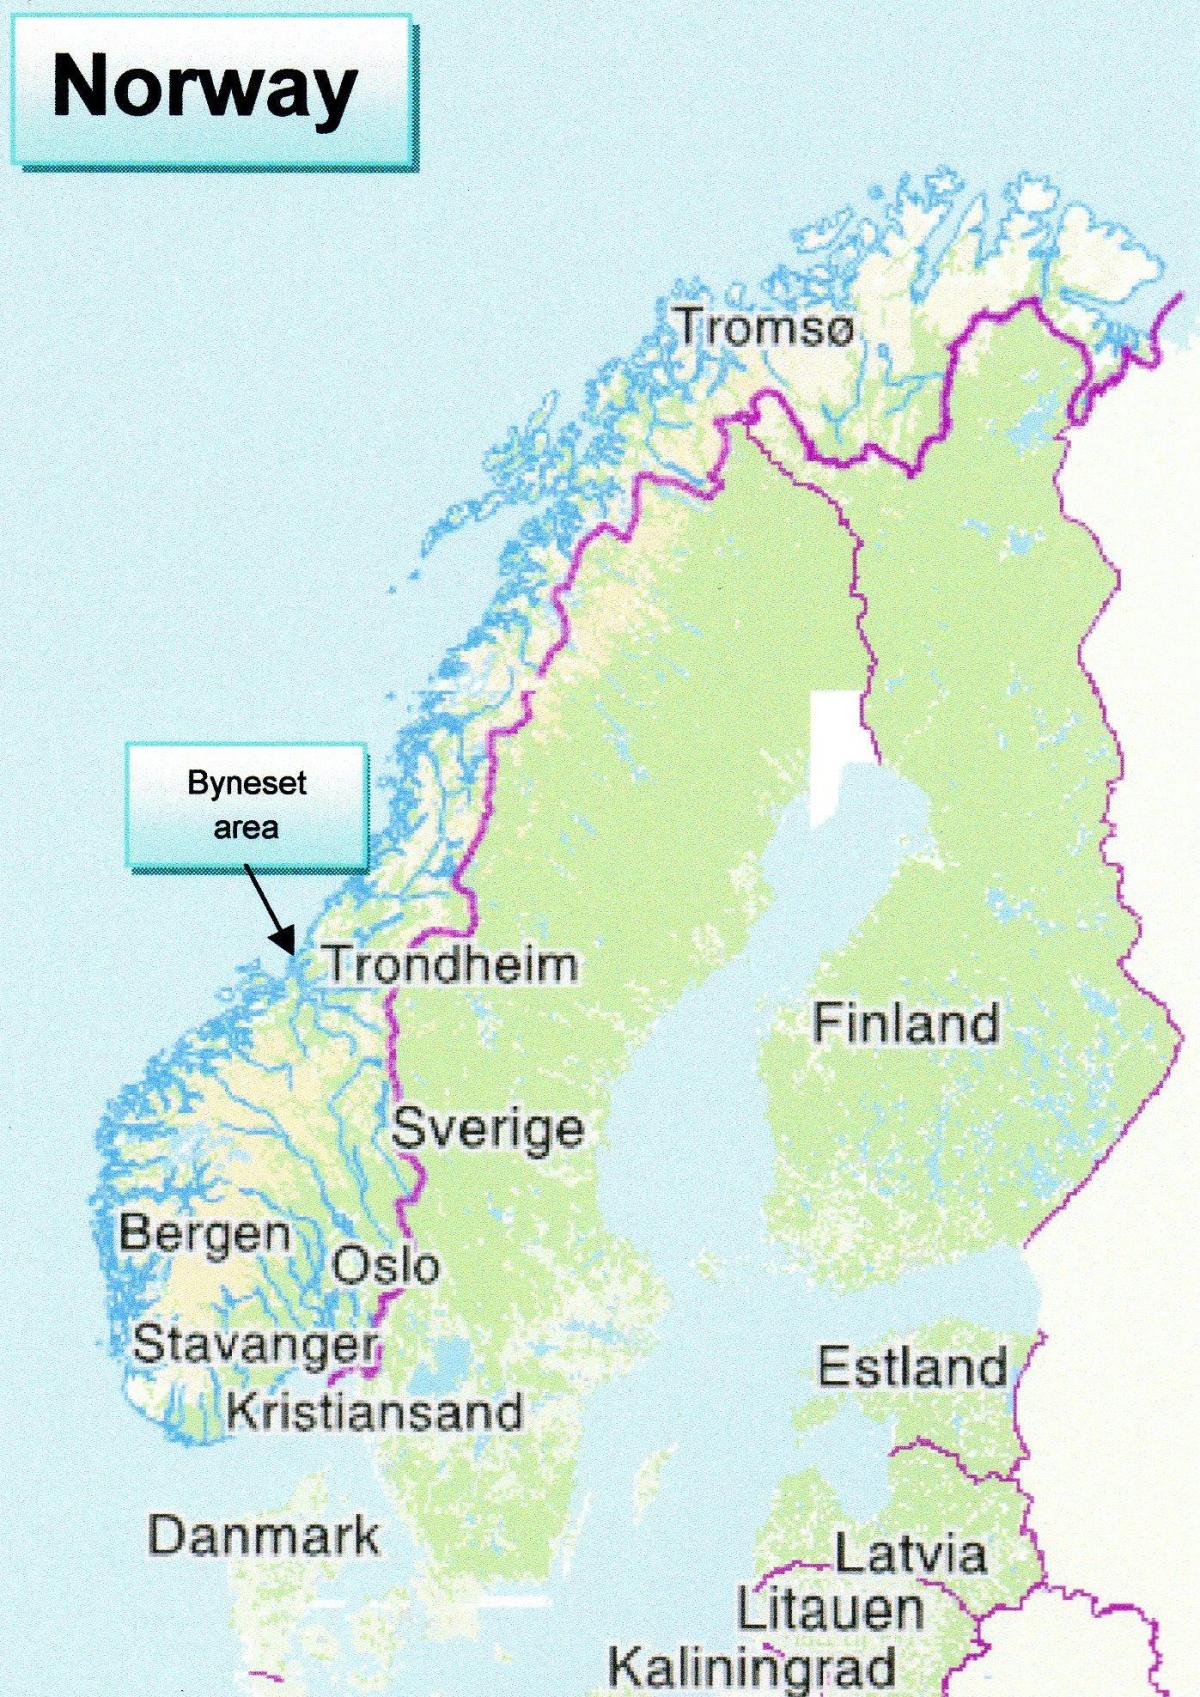 Zemljevid trondheimu na Norveškem